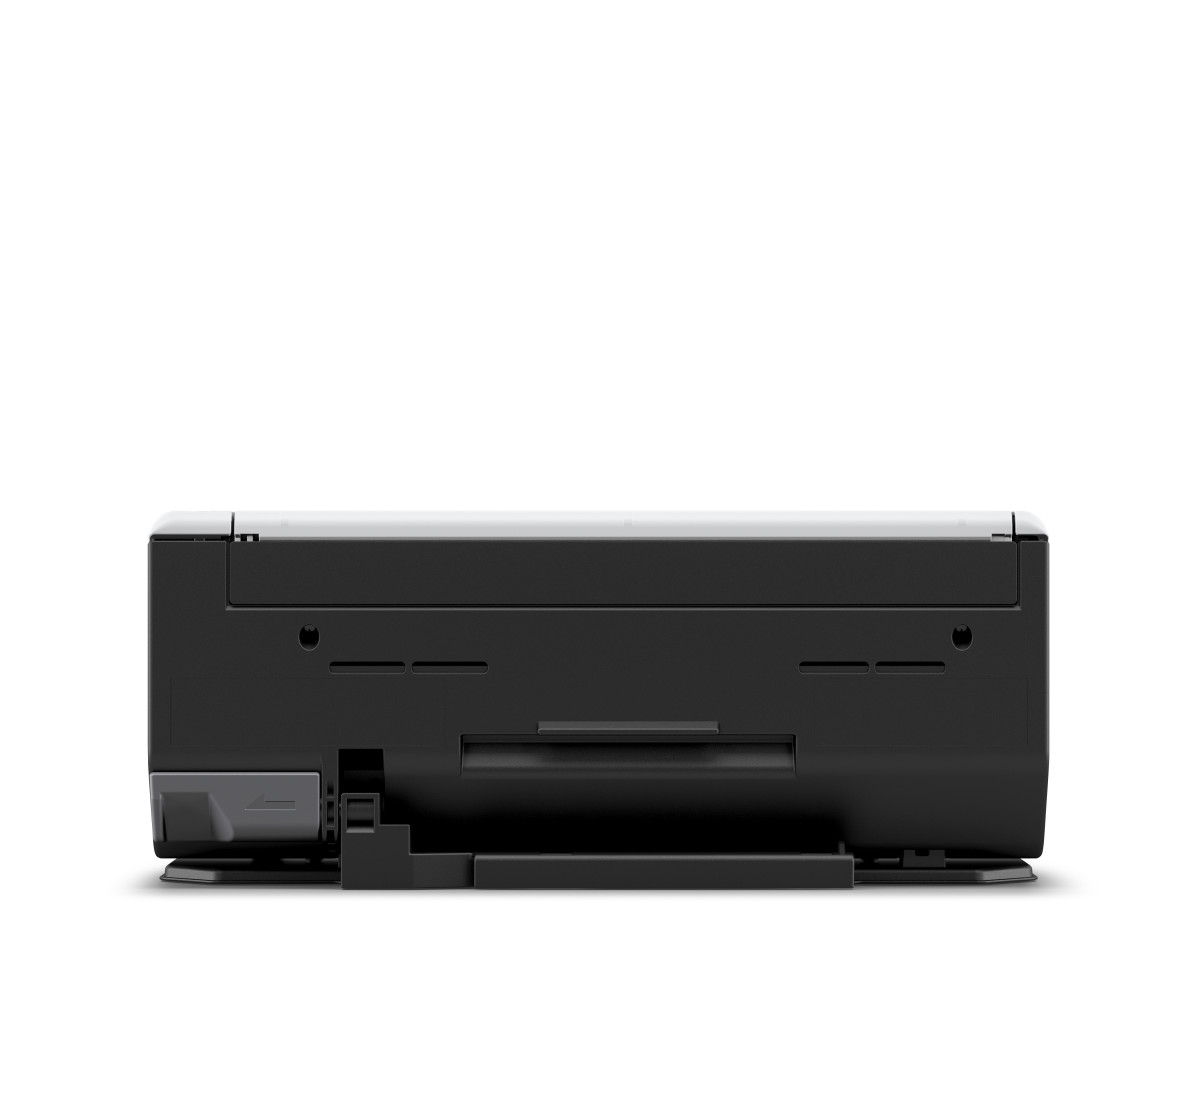 ES-C320W A4 Compact Desktop Scanner